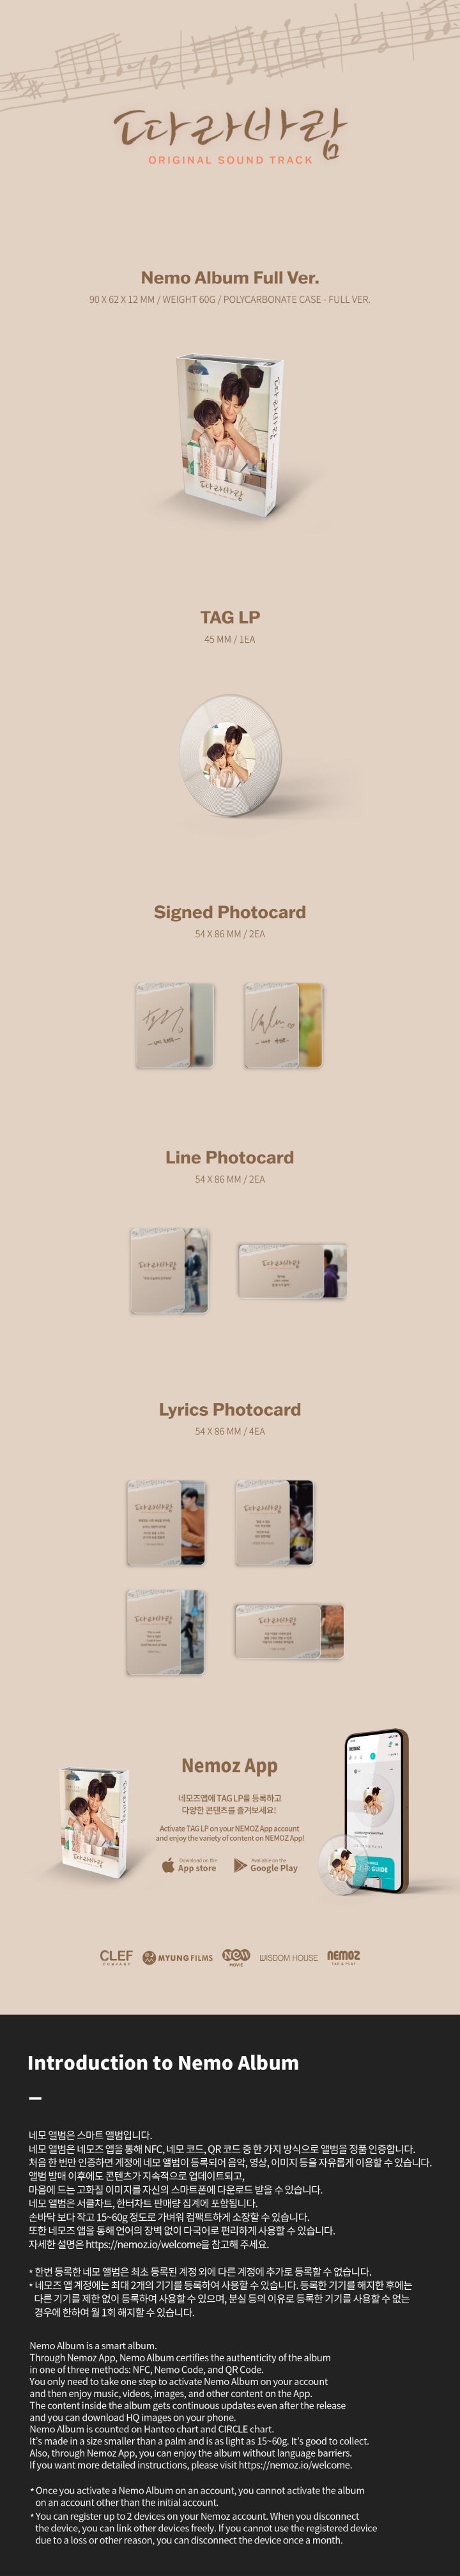 1 TAG LP
2 Signed Photo Cards
2 Line Photo Cards
4 Lyrics Photo Cards